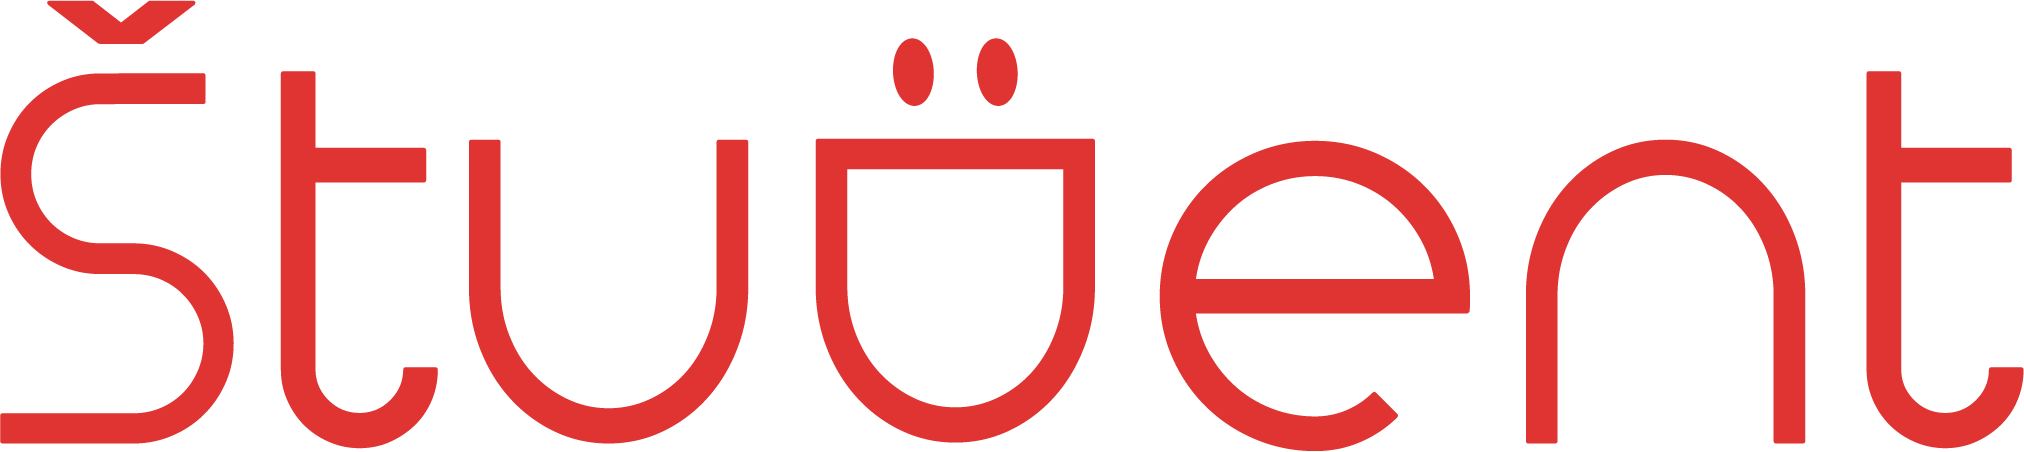 Logotip - student